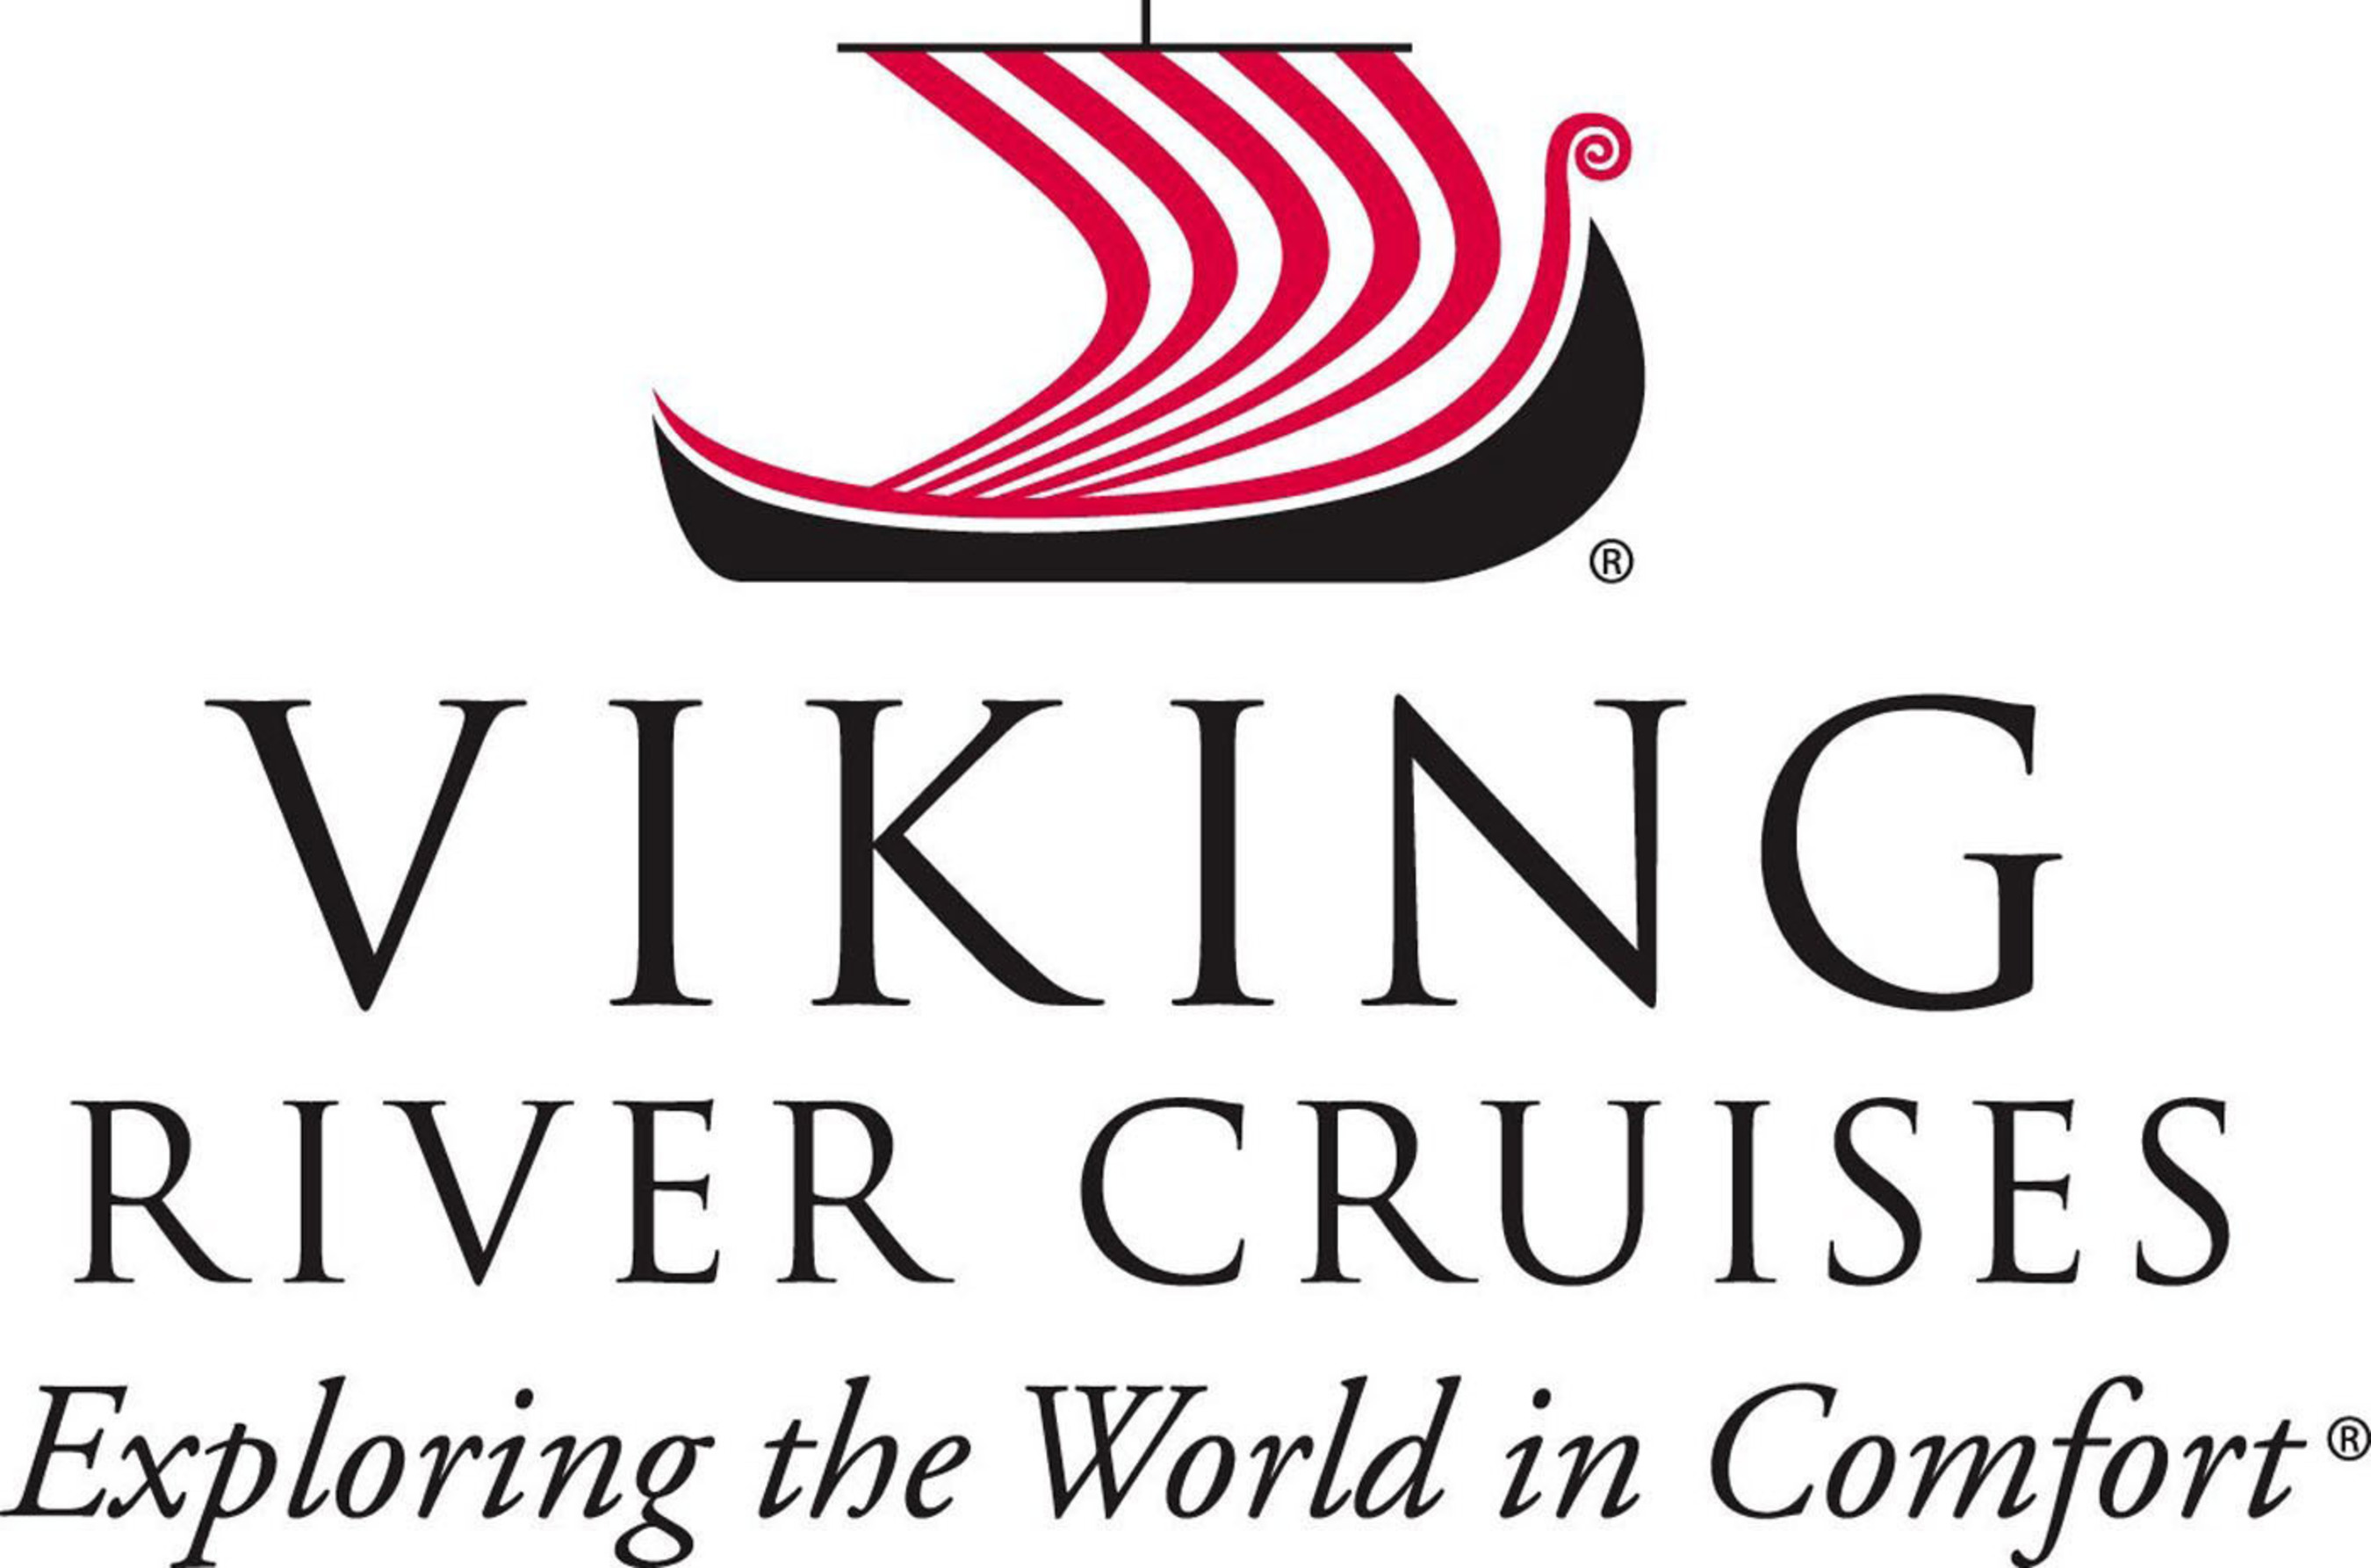 Viking River Cruises logo.